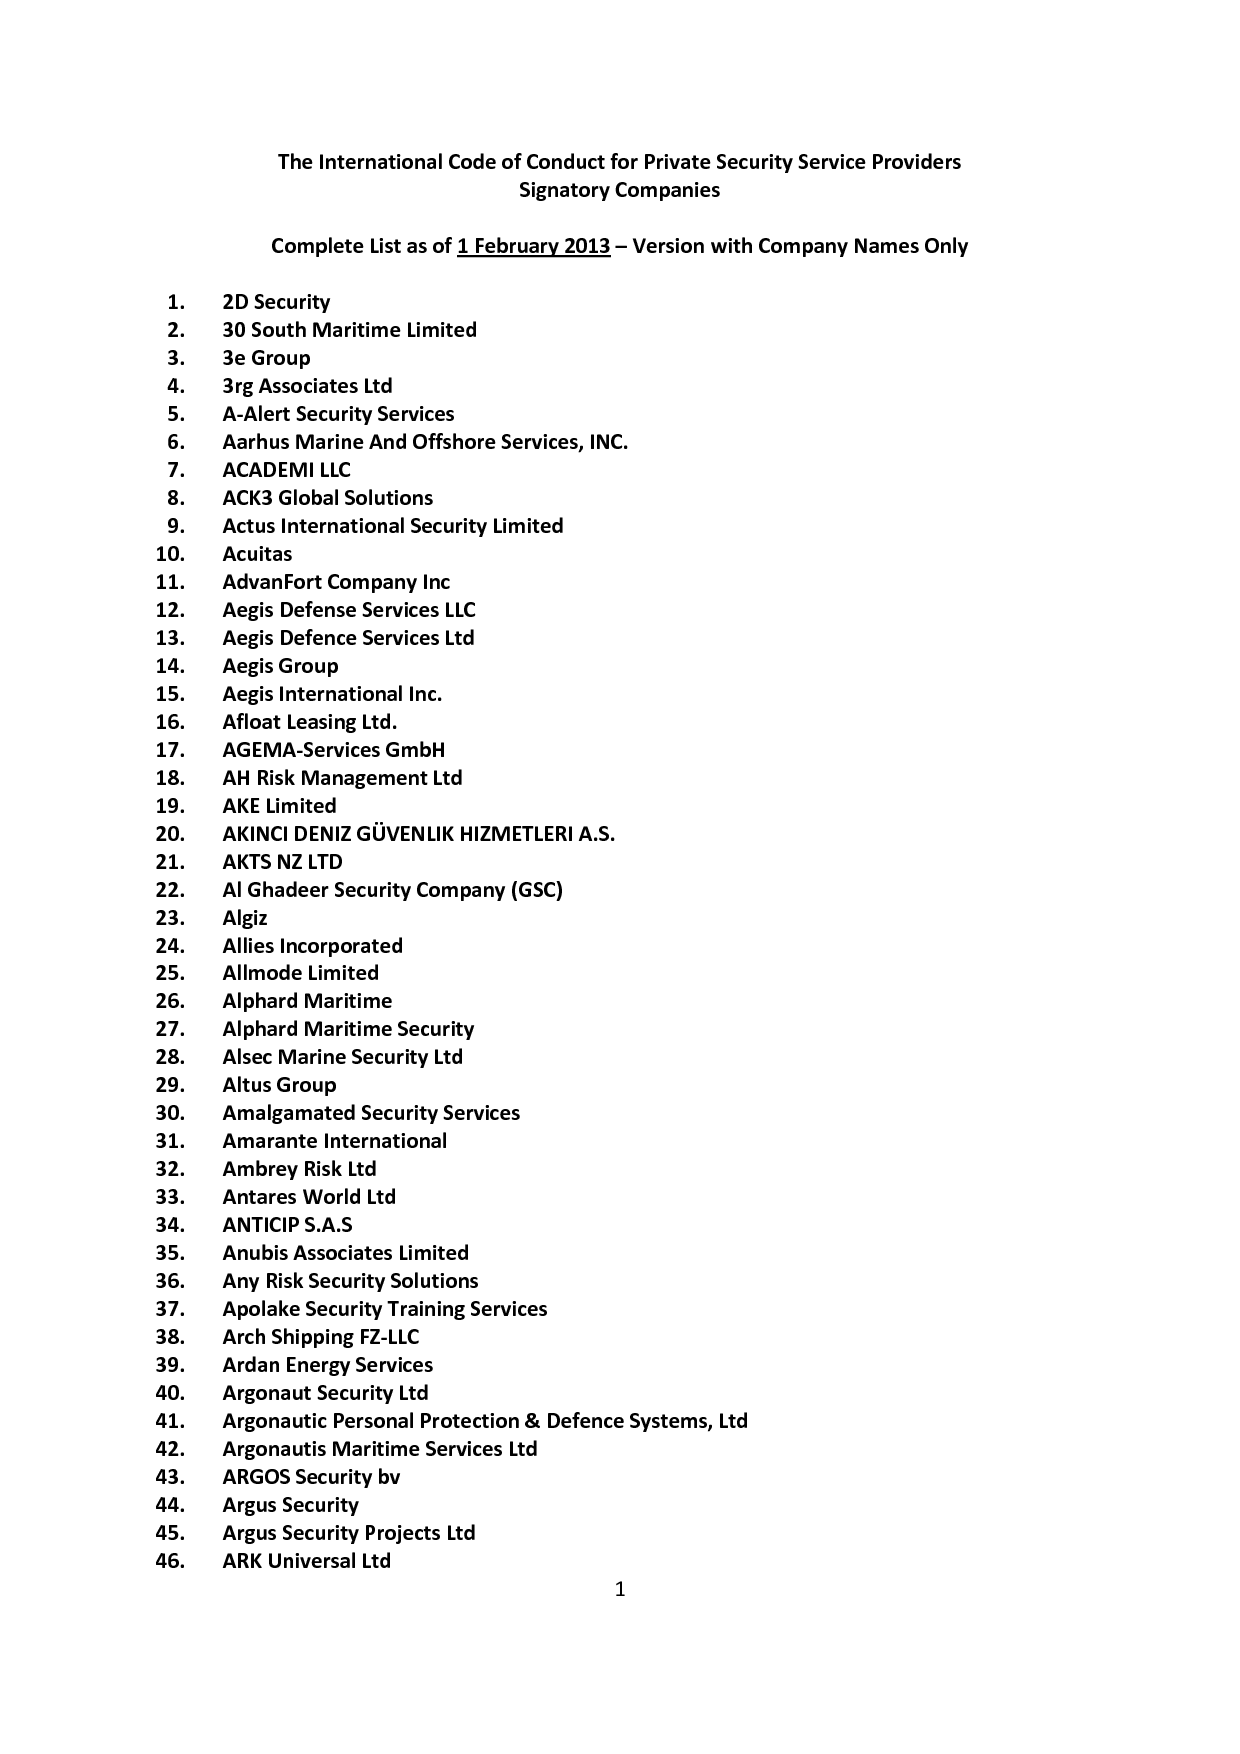 592 Signatory Companies as of 1 February 2013 - International